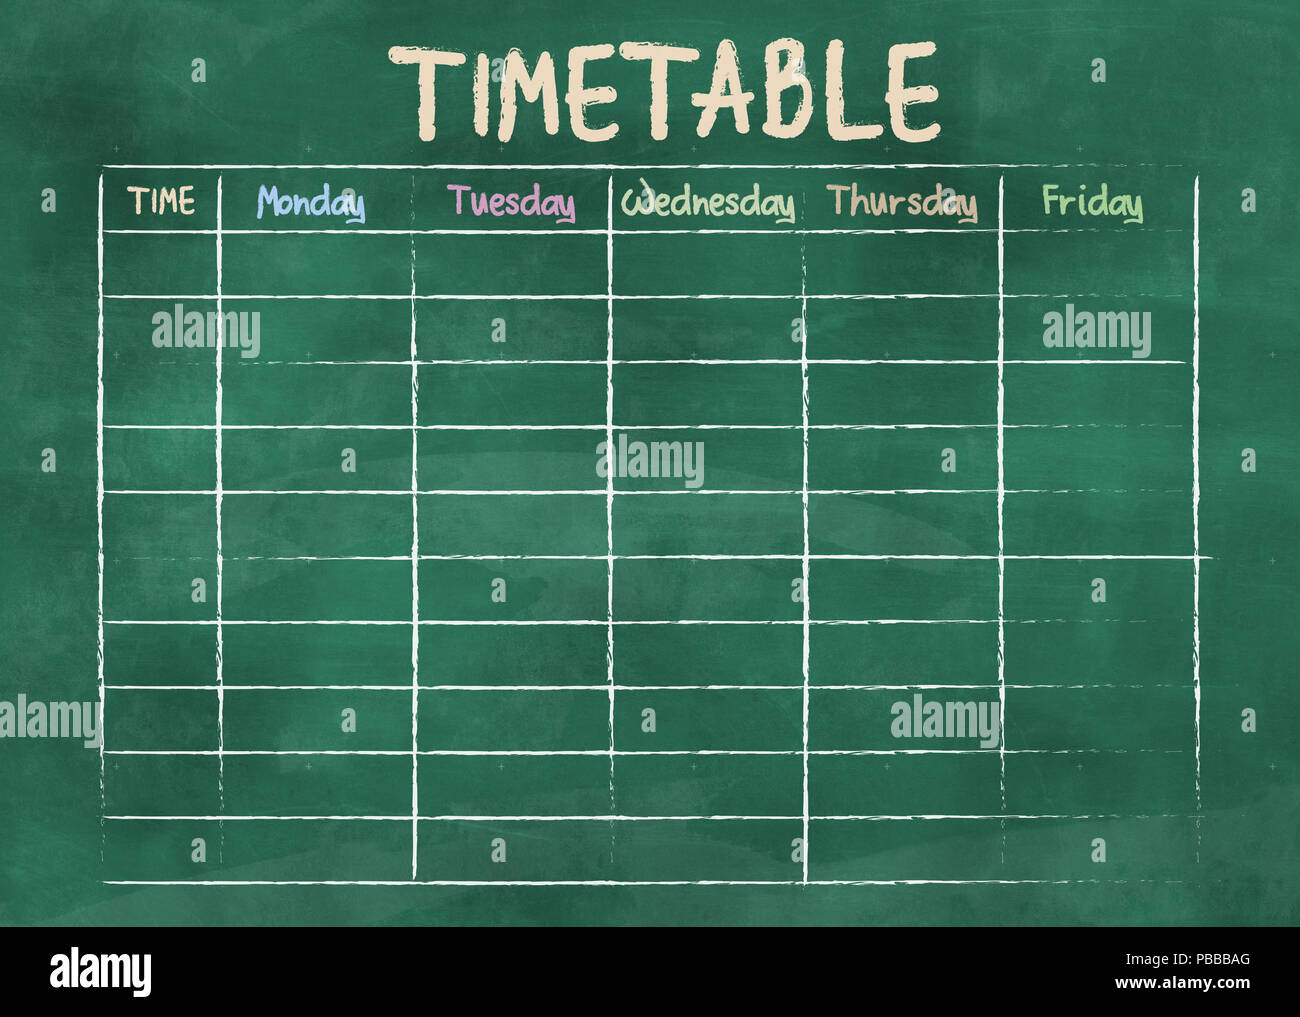 Calendario escolar o el horario de clases de pizarra verde Foto de stock